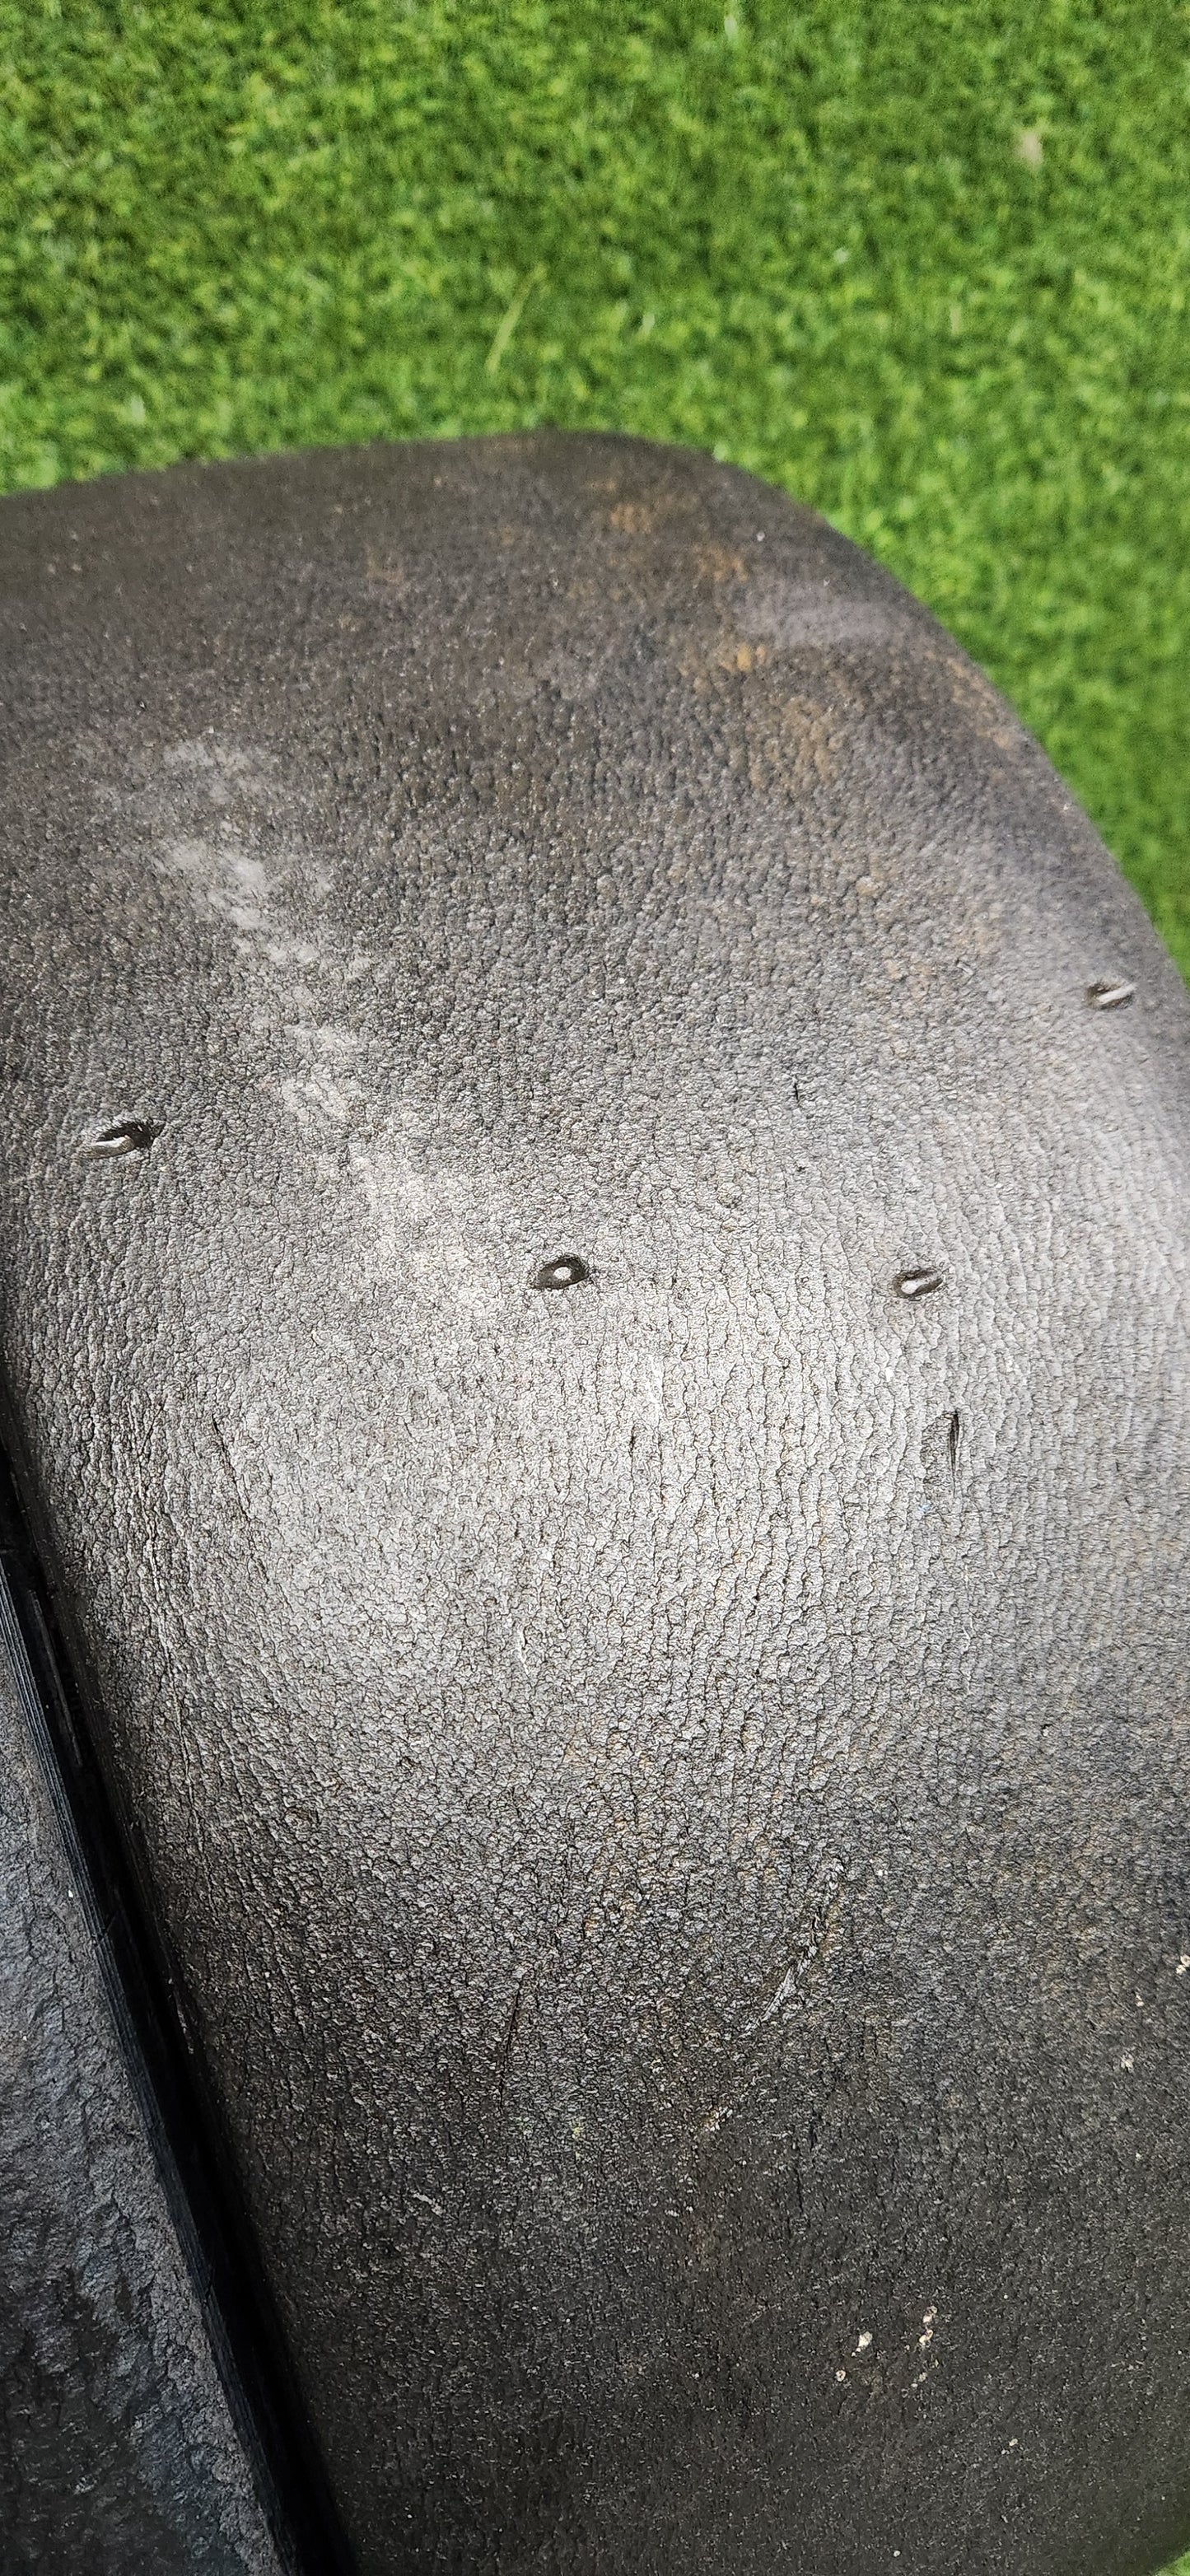 Goodyear (Dunlop) 210/65/18 Slick Trackday/Racing Tyres (225/40/18). Pair